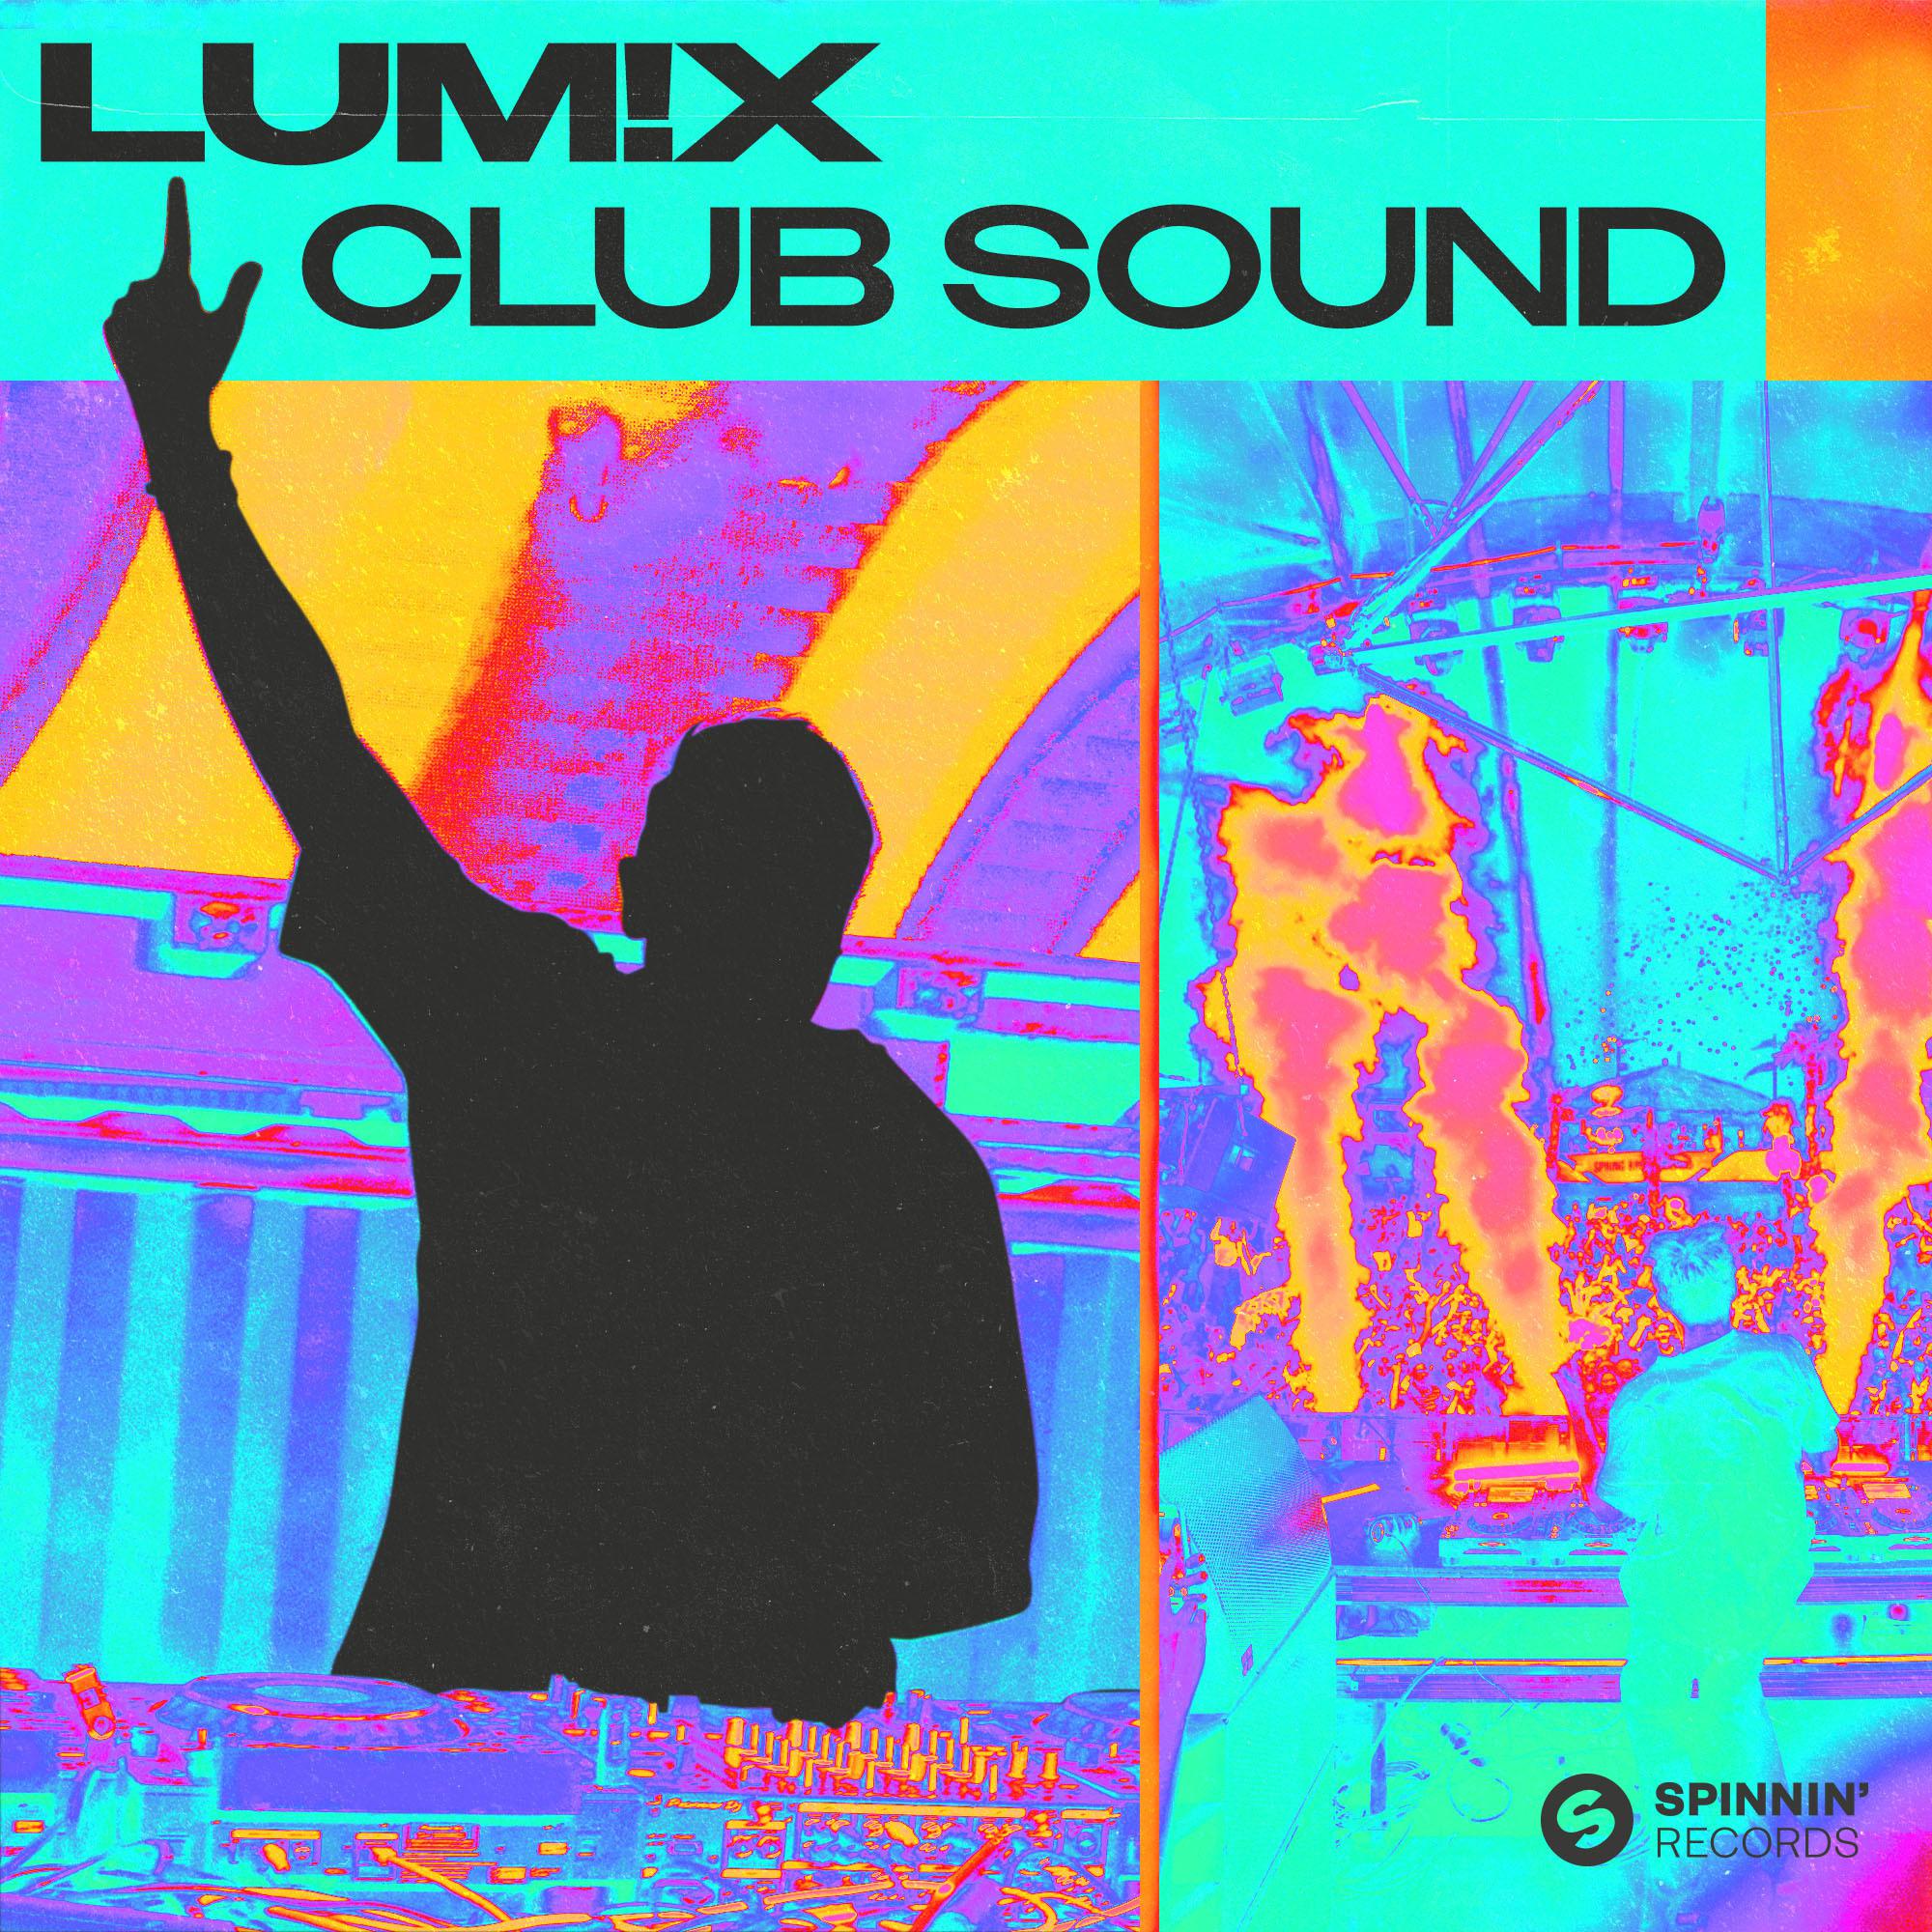 LUM!X - Club Sound (Extended Mix)